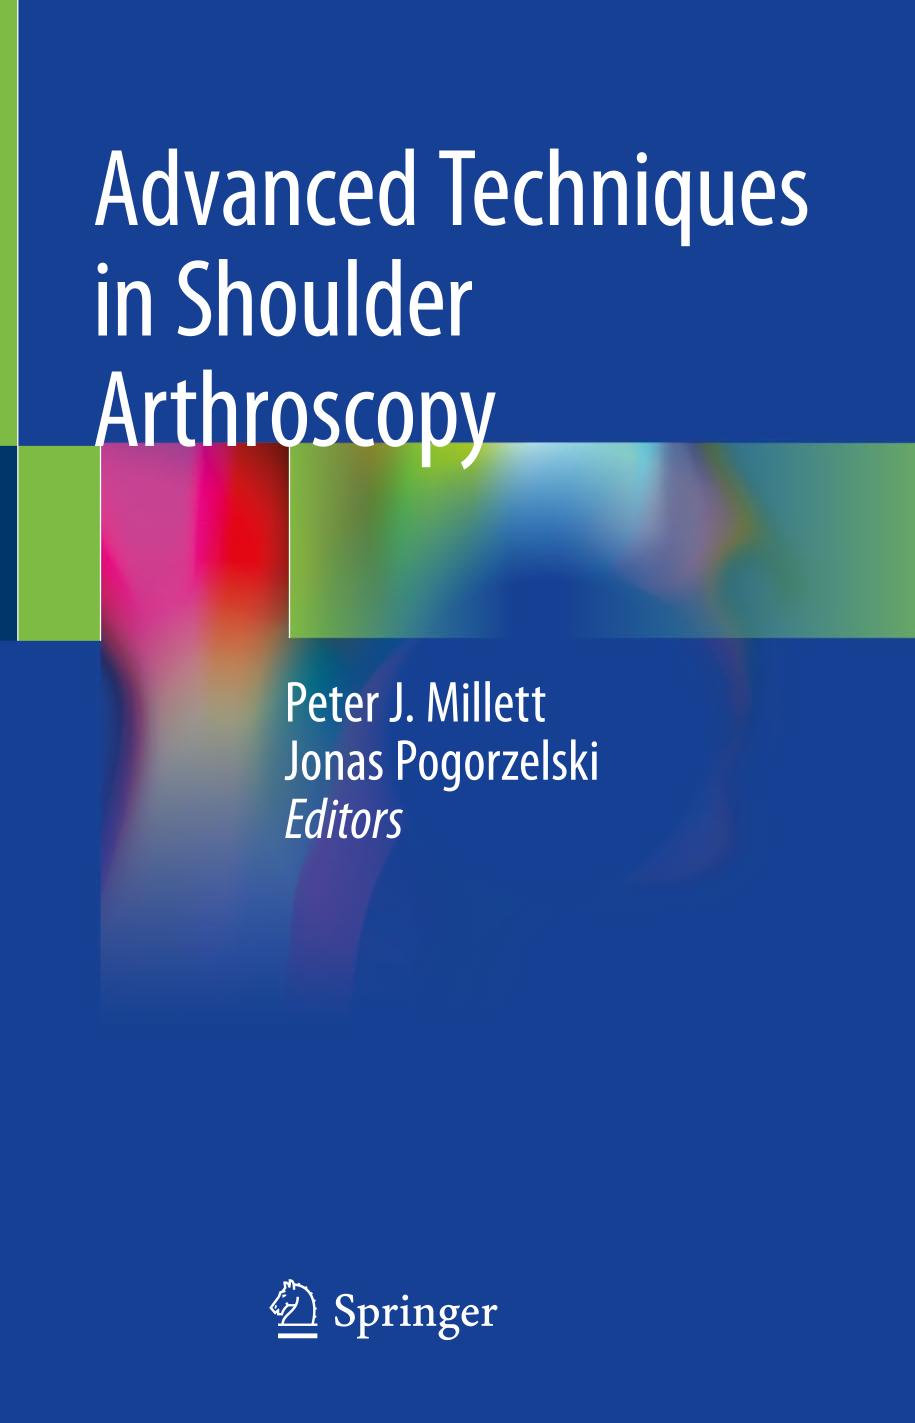 Advanced techniques in shoulder arthroscopy